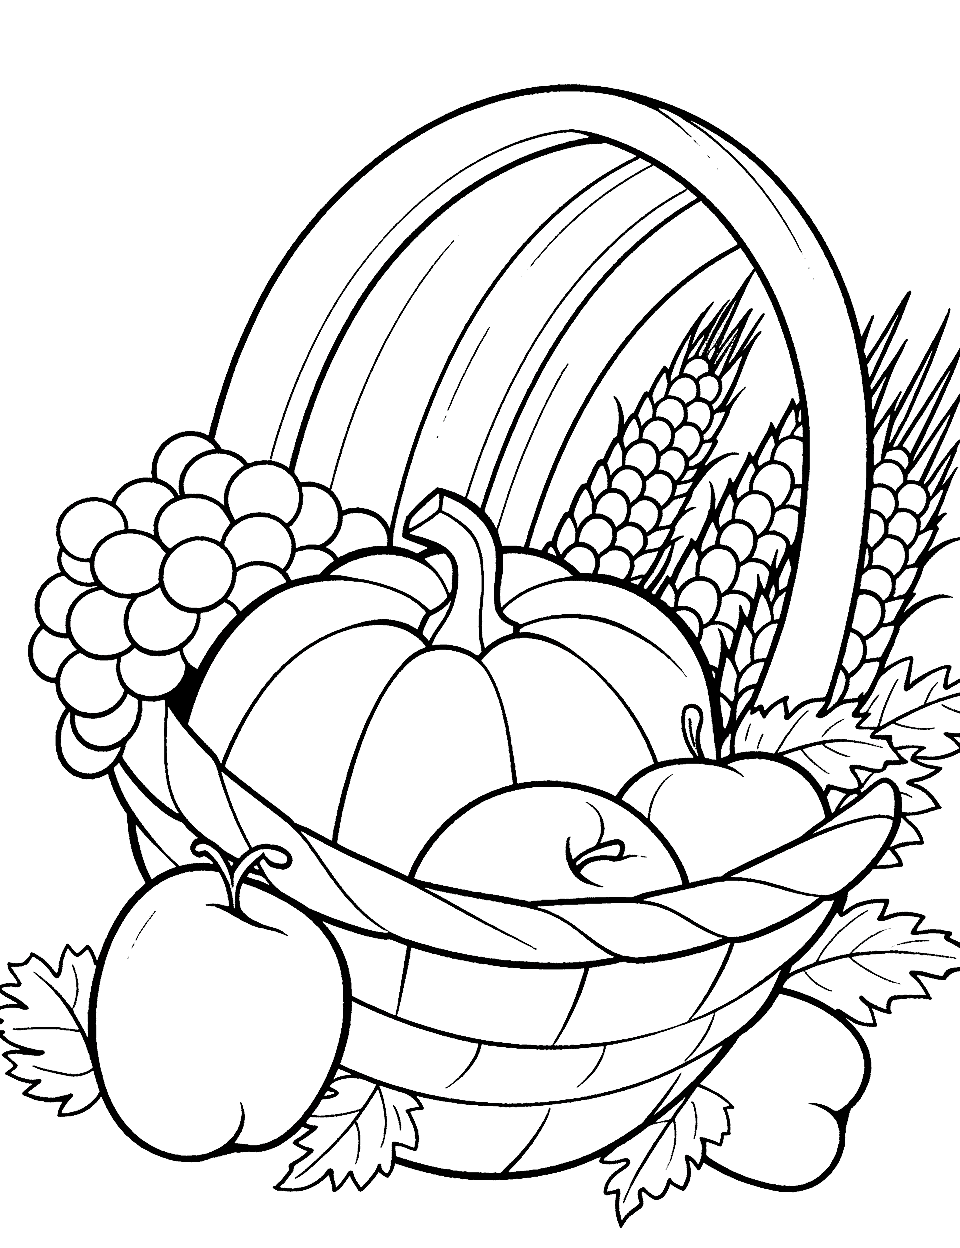 Fun Cornucopia Thanksgiving Coloring Page - A simple cornucopia design for first grade students.